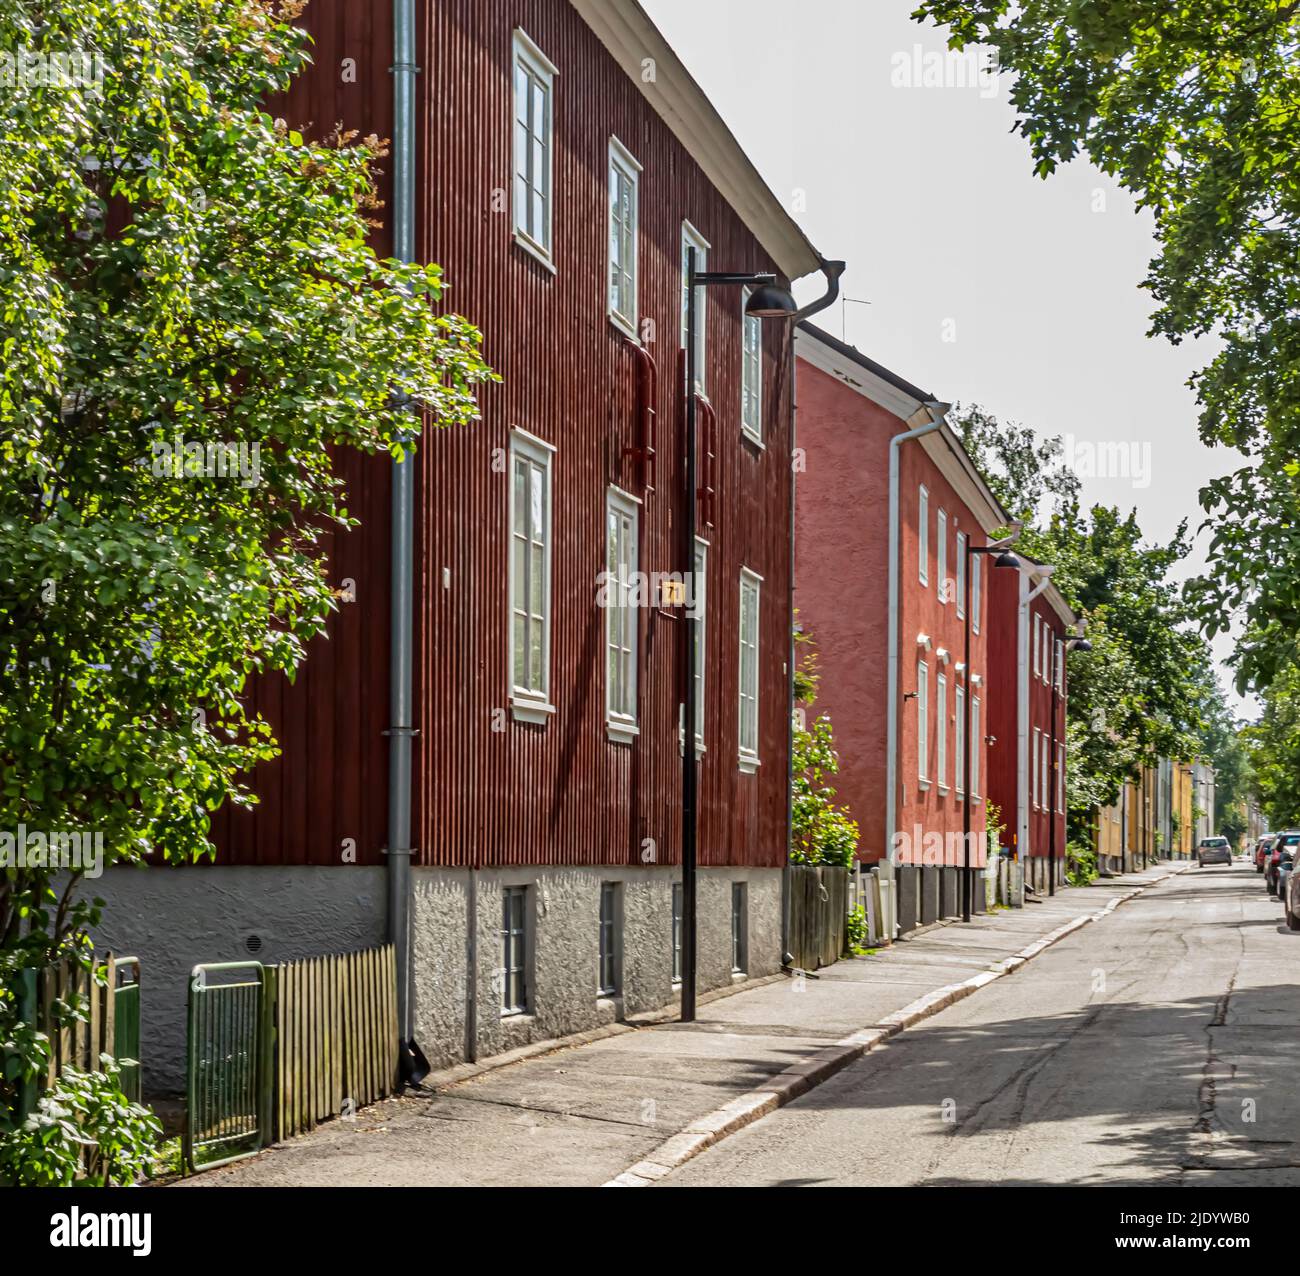 Wooden buildings in the Kumpula area of Helsinki, Finland in summer. Stock Photo